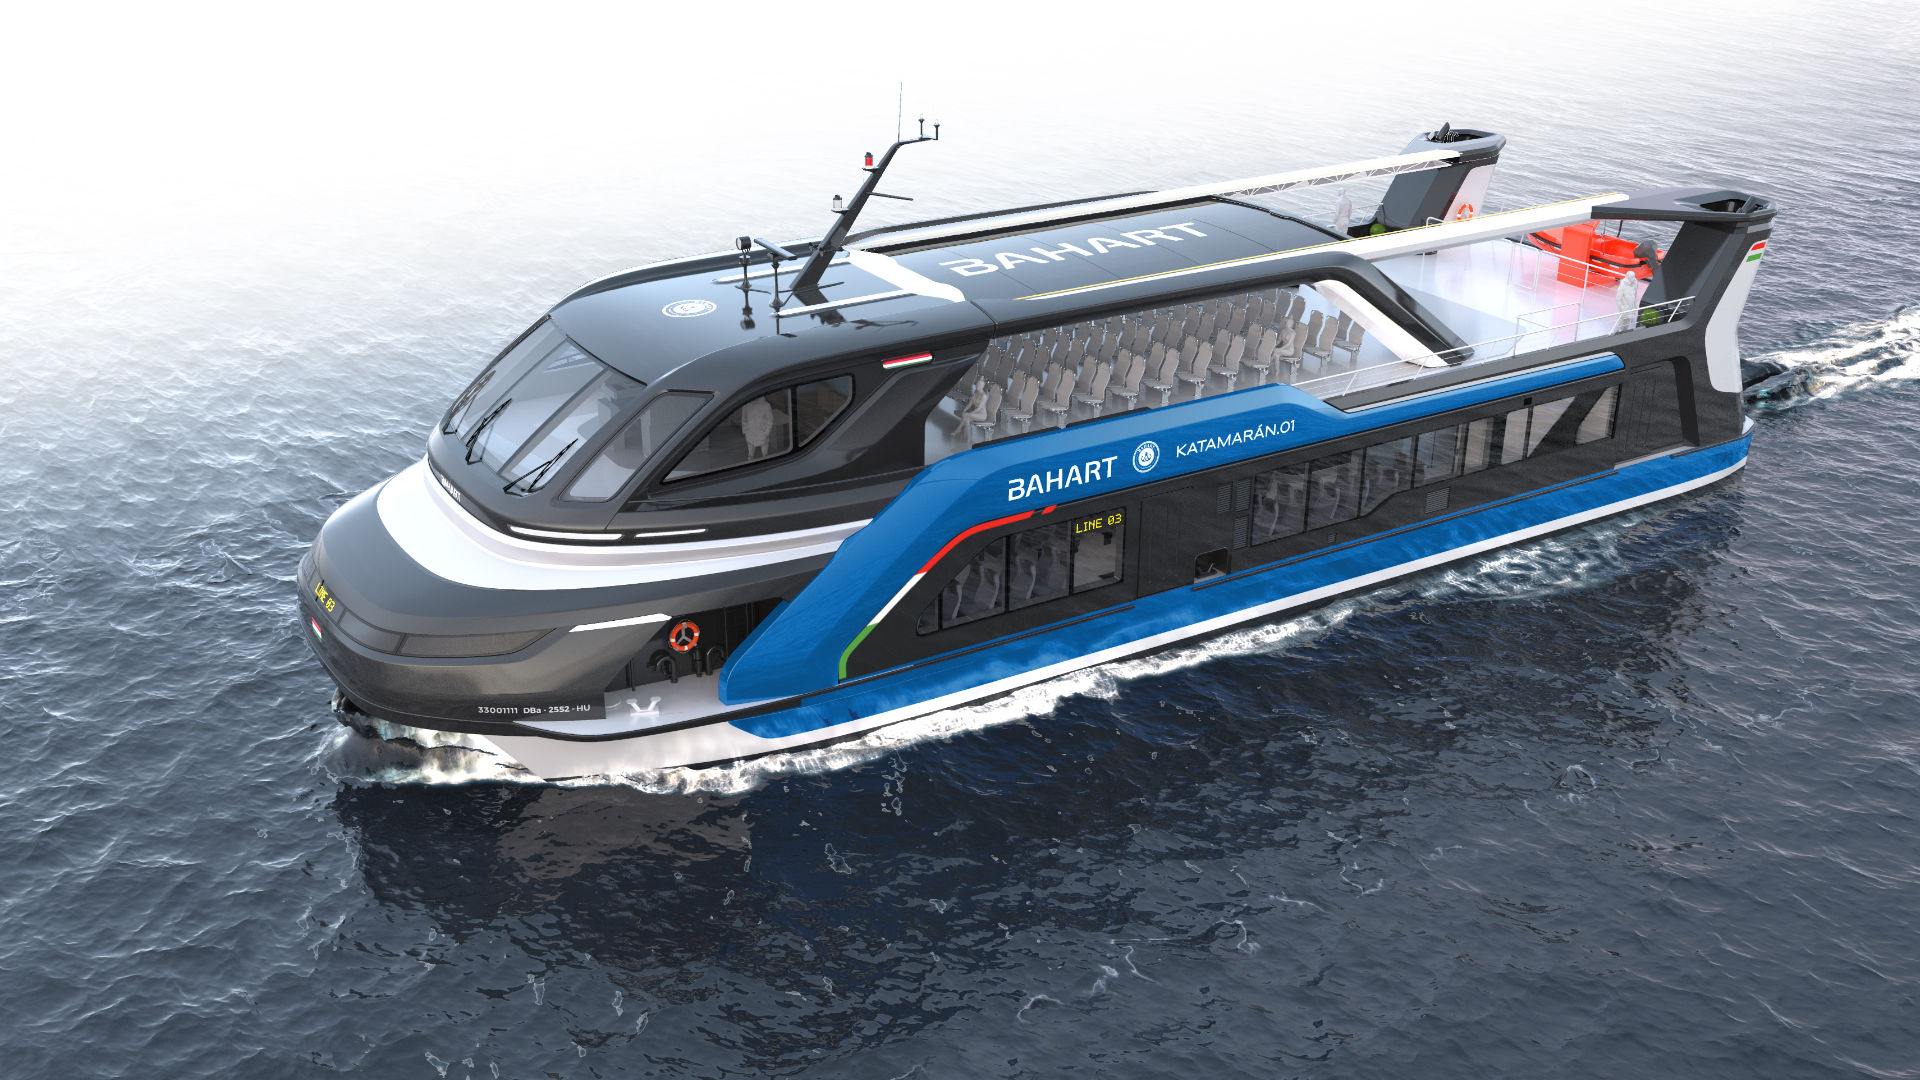 Bahart - New Catamaran for Balaton - design by WERKEMOTION